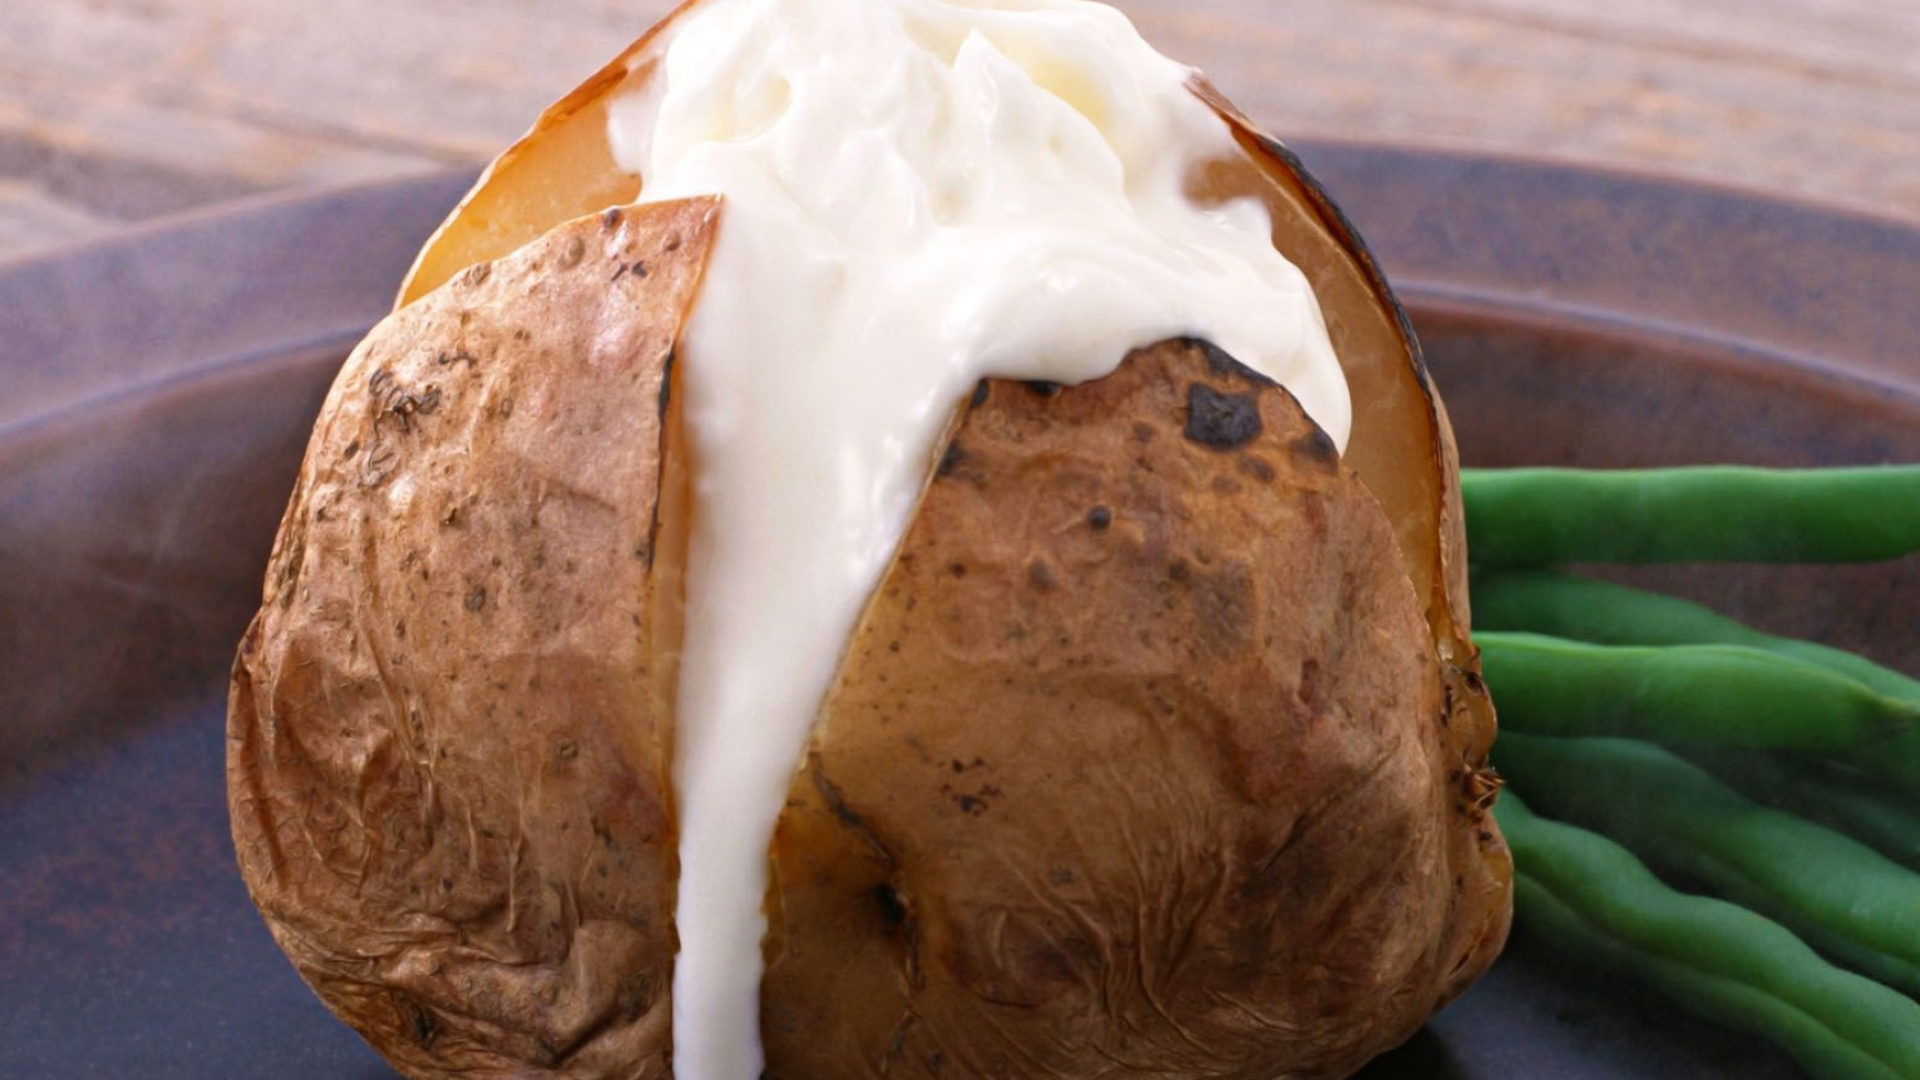 Cream-filled roasted potato, Gourmet delight, Irresistible flavors, Indulgent treat, 1920x1080 Full HD Desktop